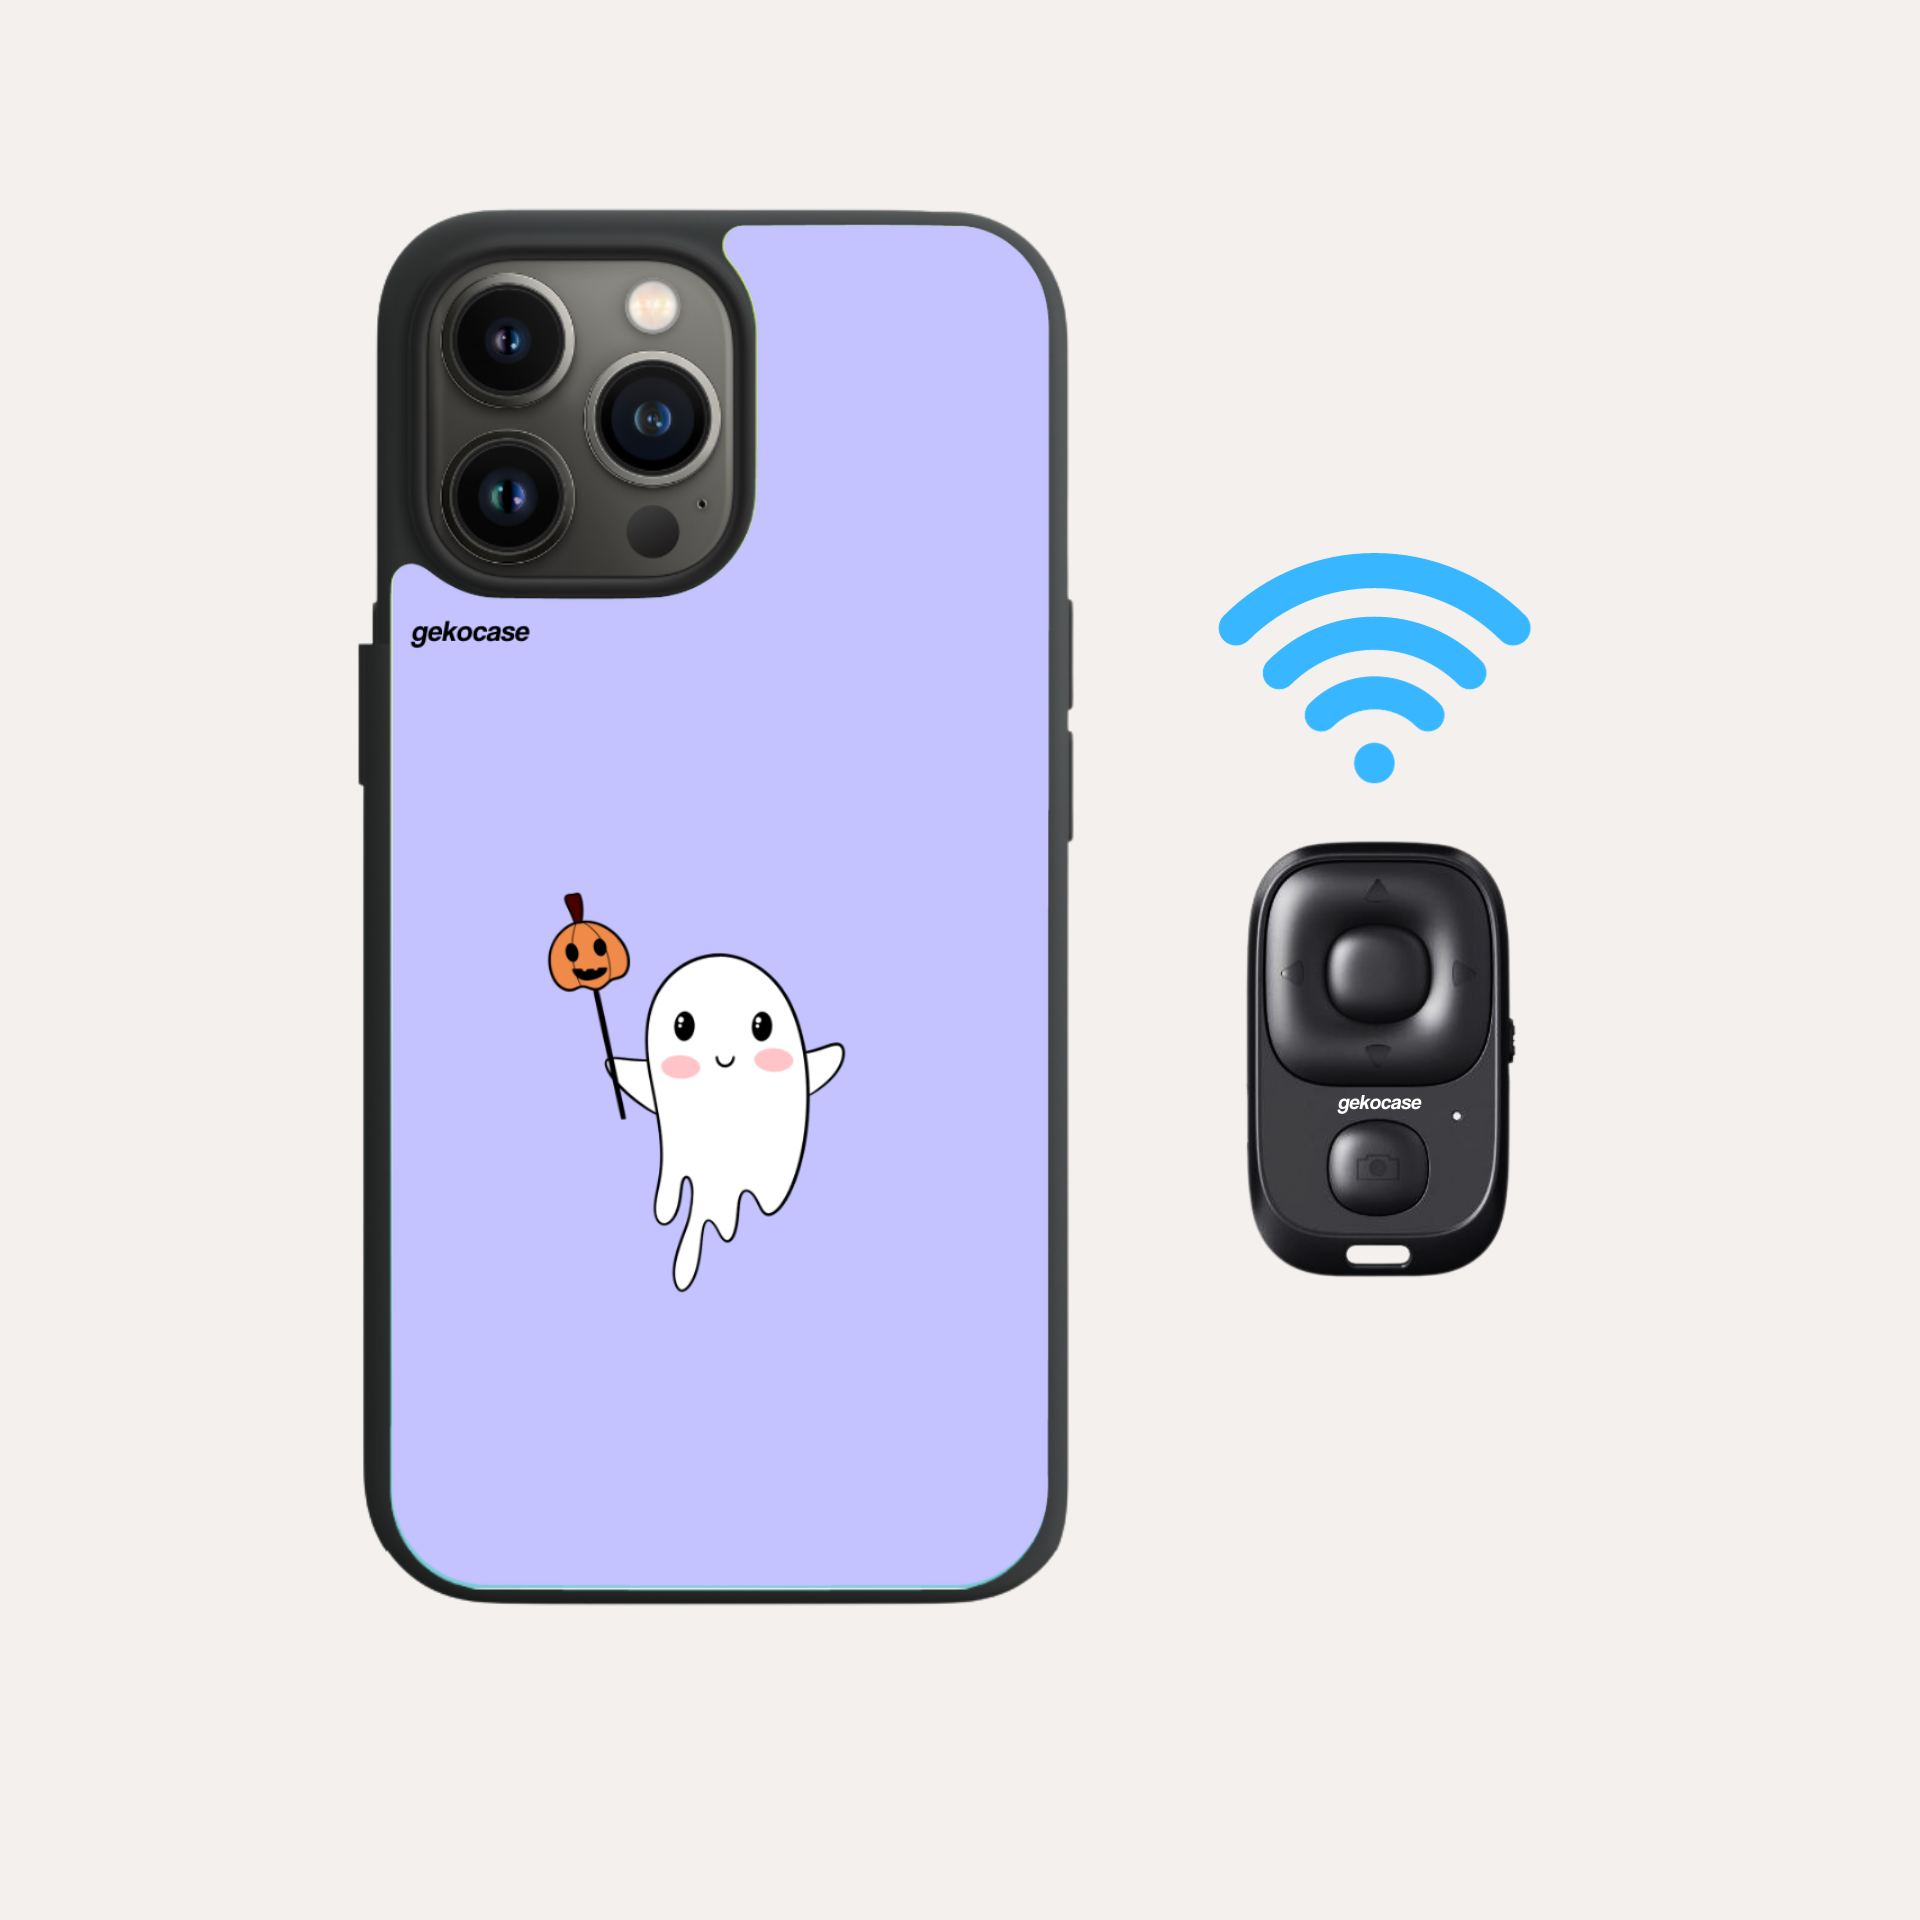 gekocase original + Wireless photo remote + Spooky Boo [skin cover]